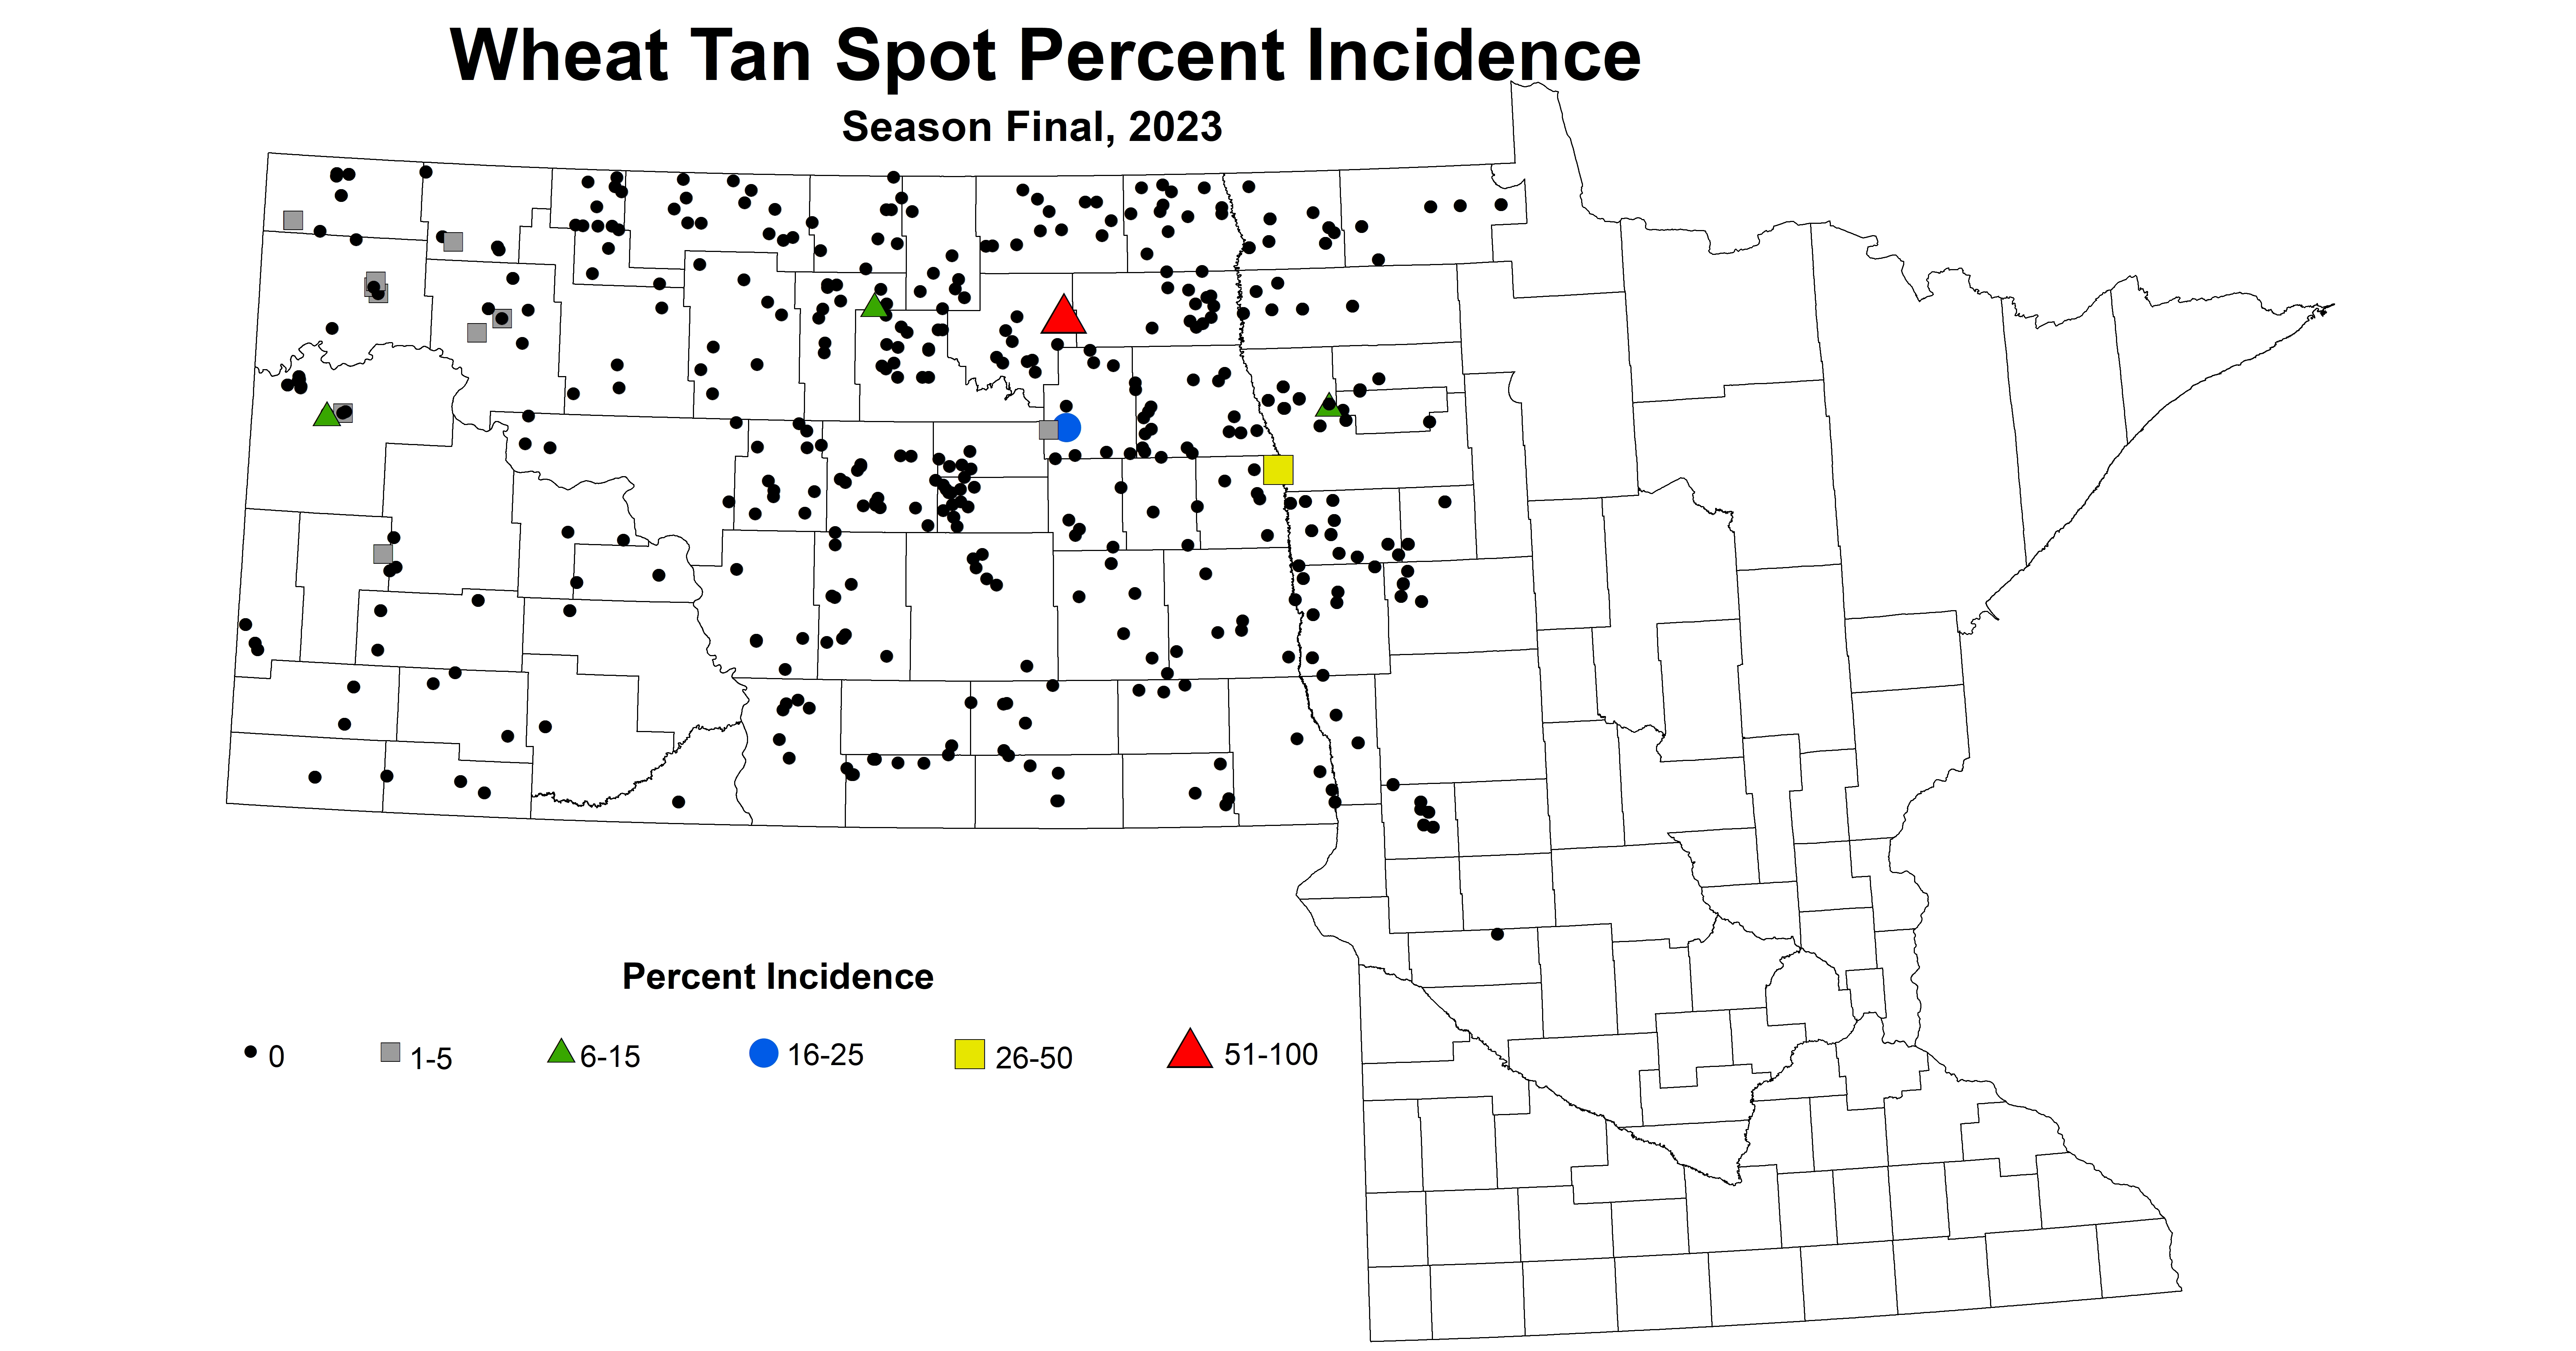 wheat tan spot incidence season final 2023